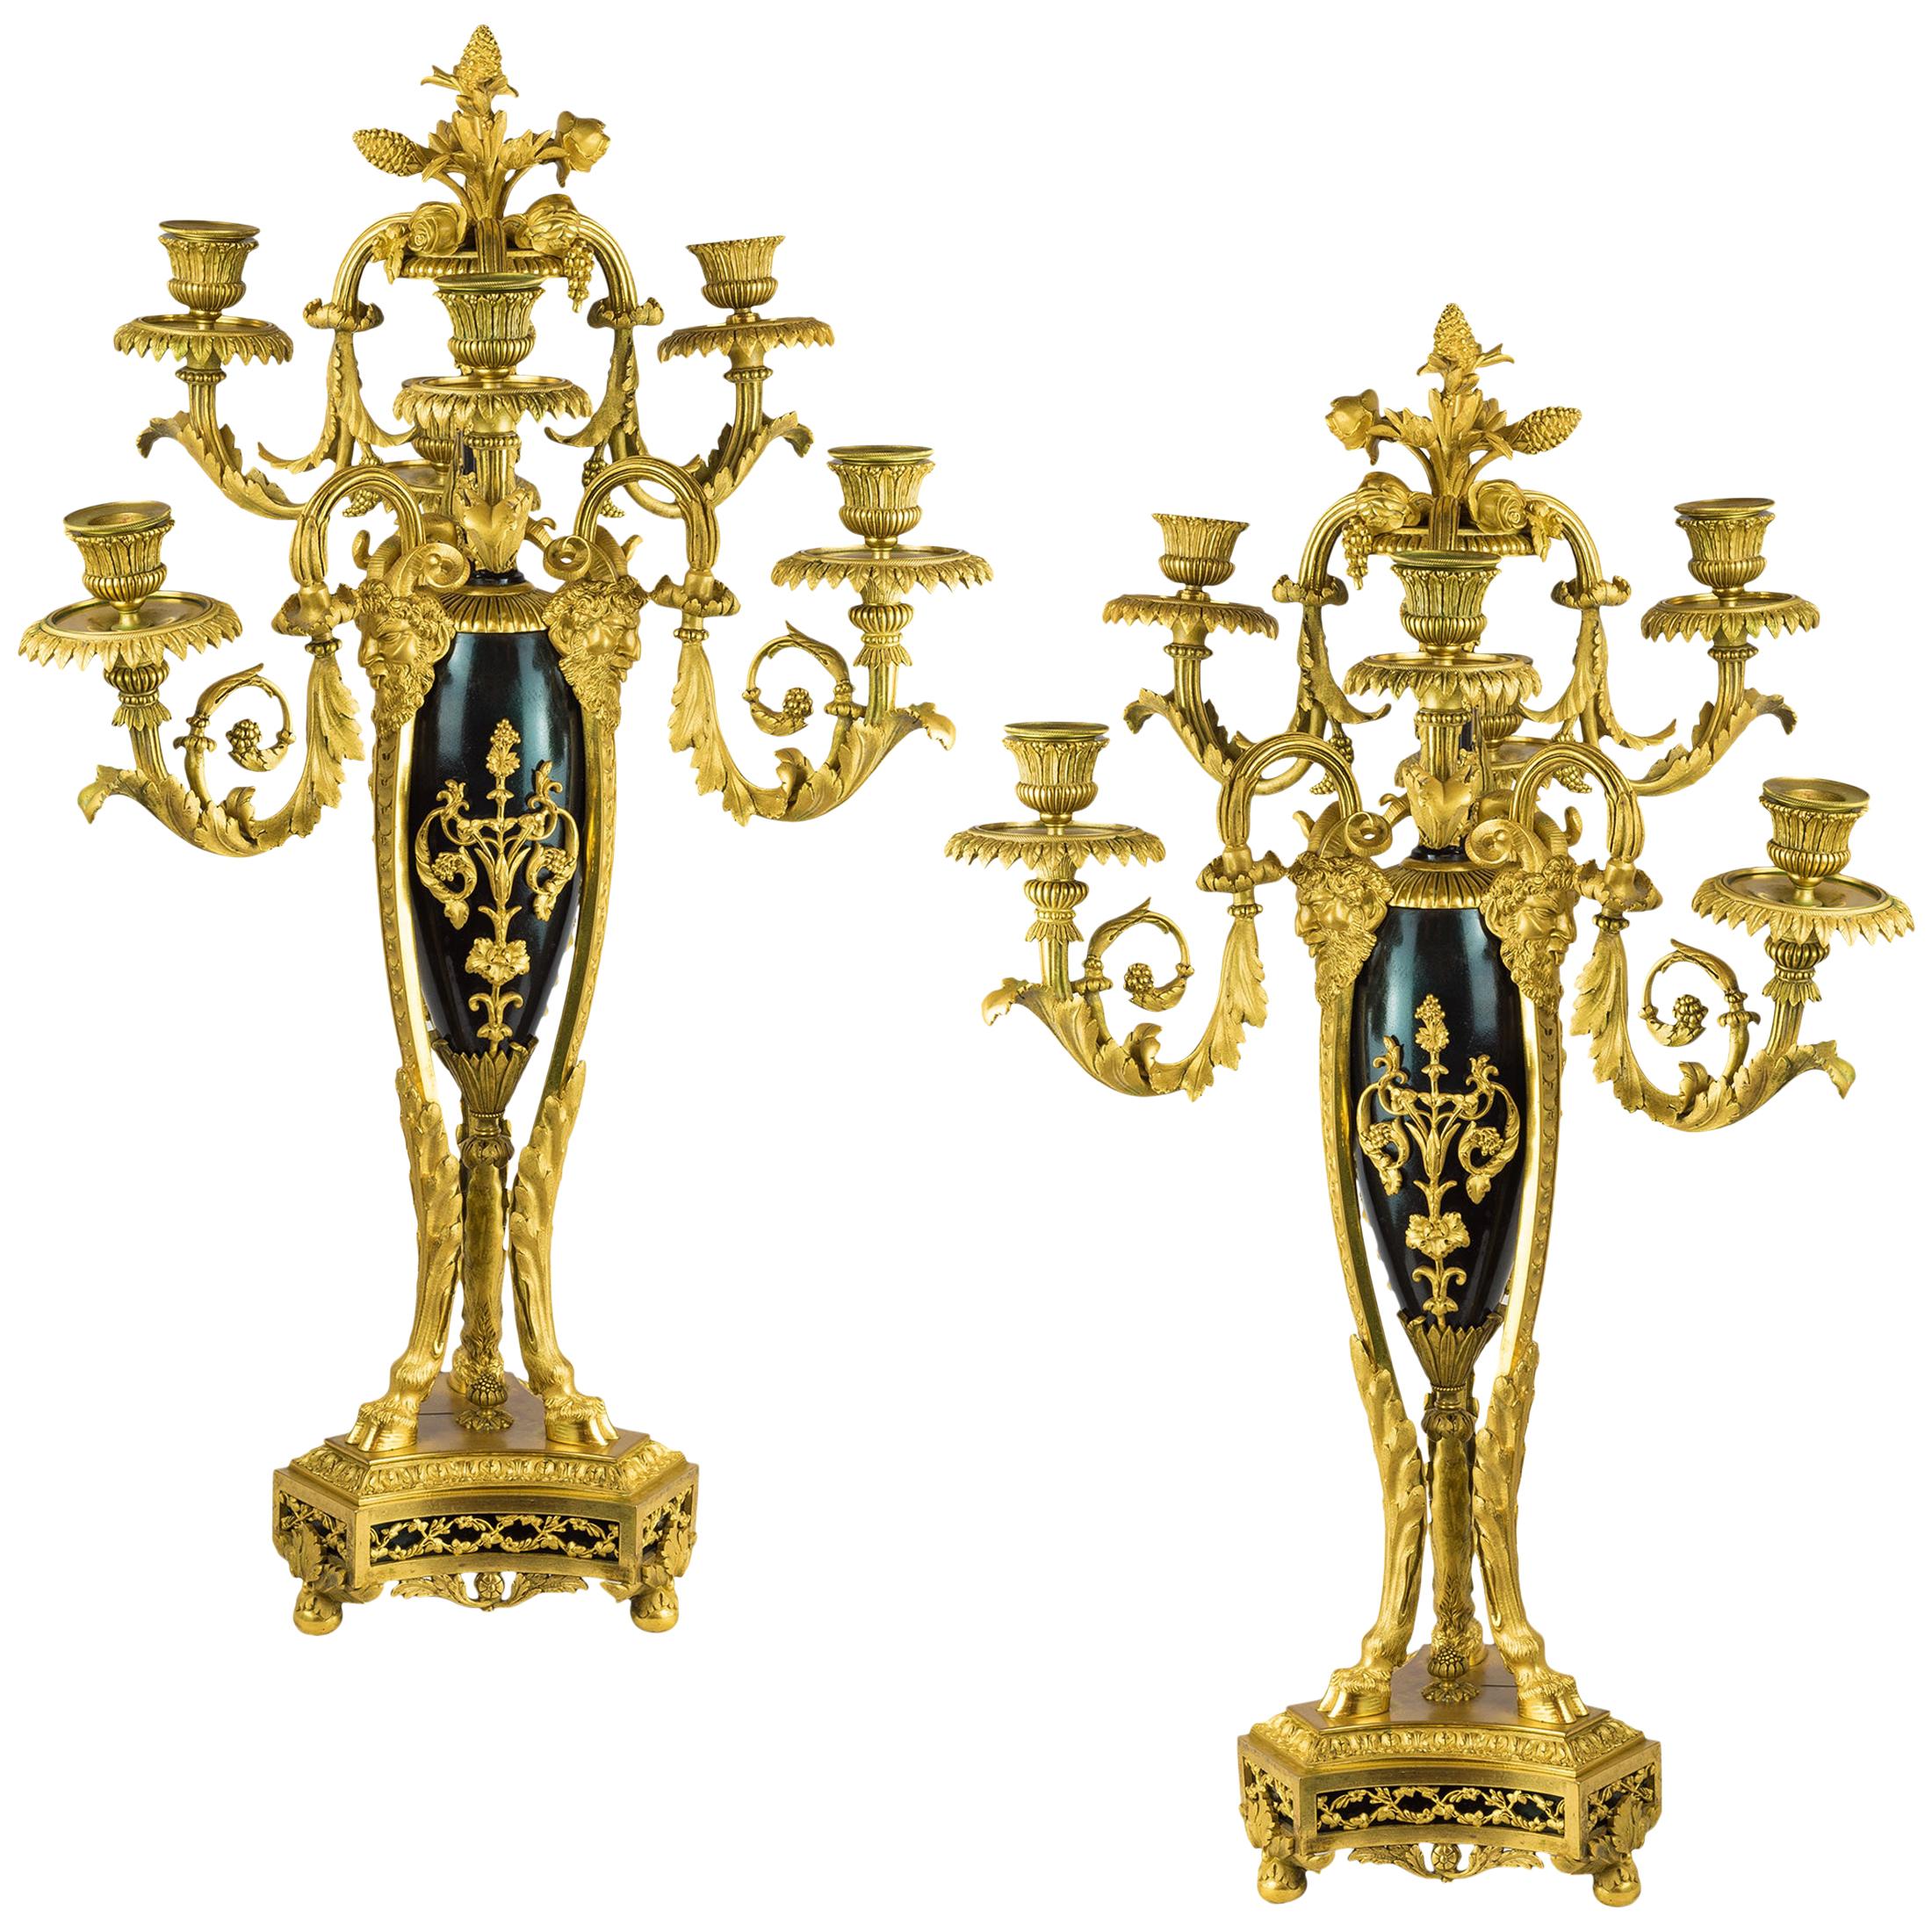 Pair of Napoleon III Gilt-Bronze Six-Light Candelabras Attributed to Beurdeley